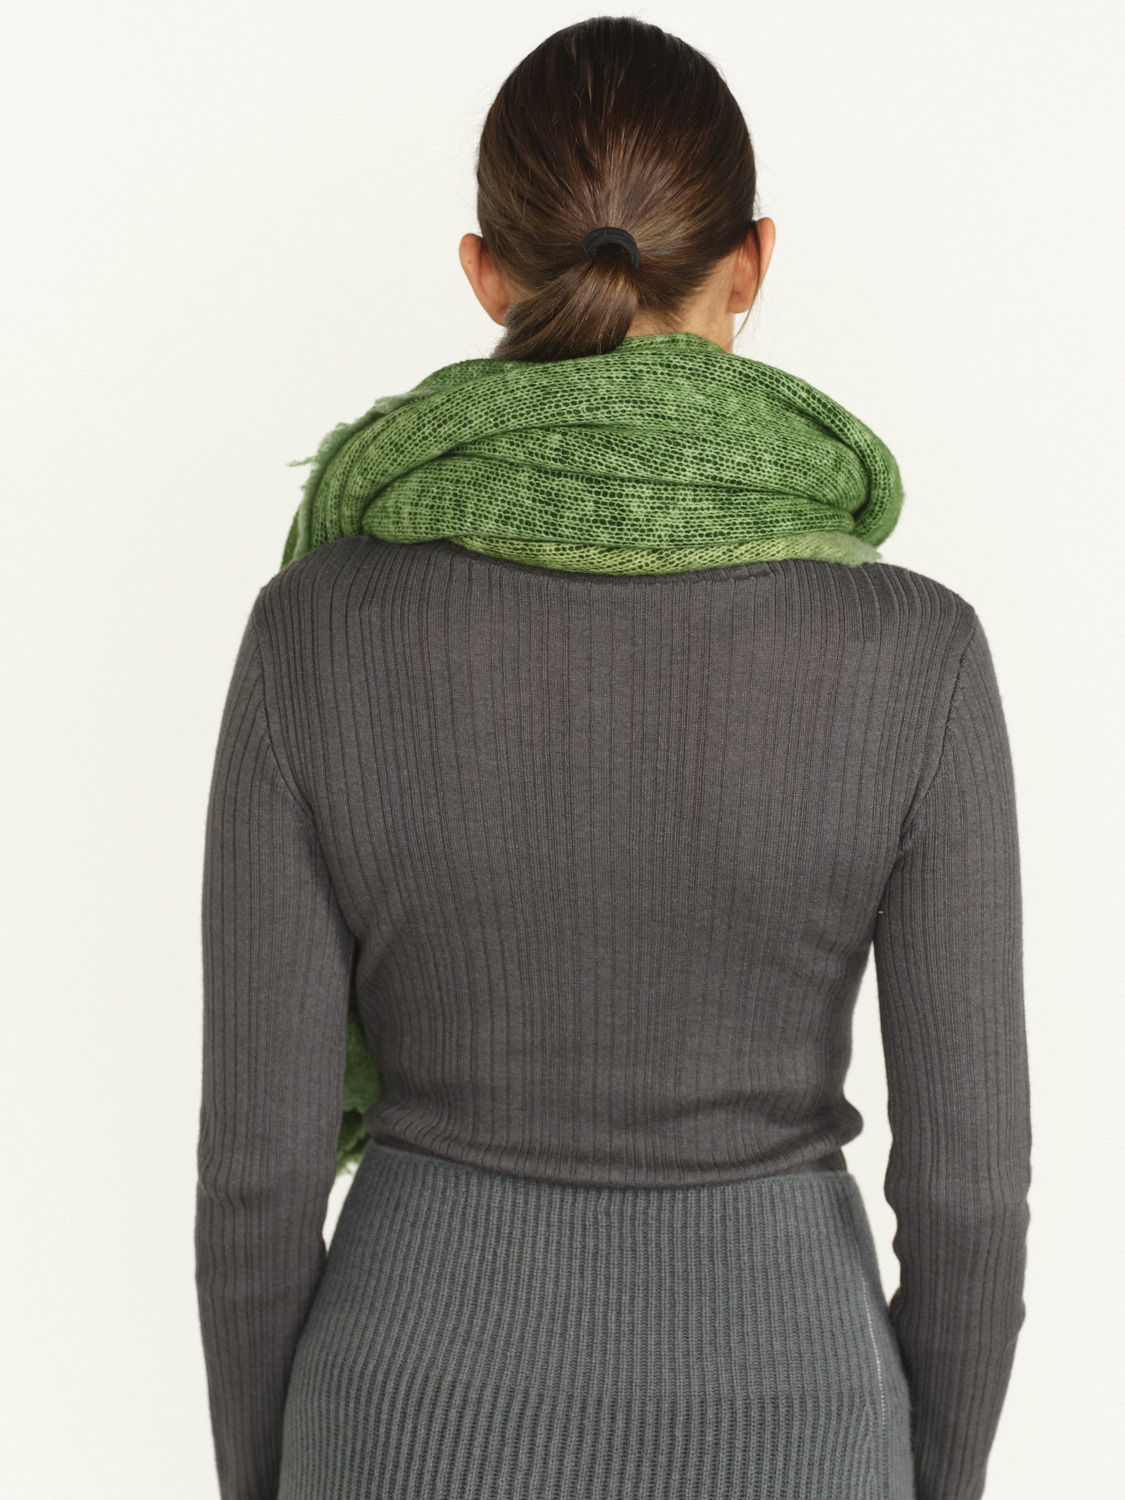 Avant Toi Oversized Scarf - Merino cashmere scarf in oversize design  green One Size